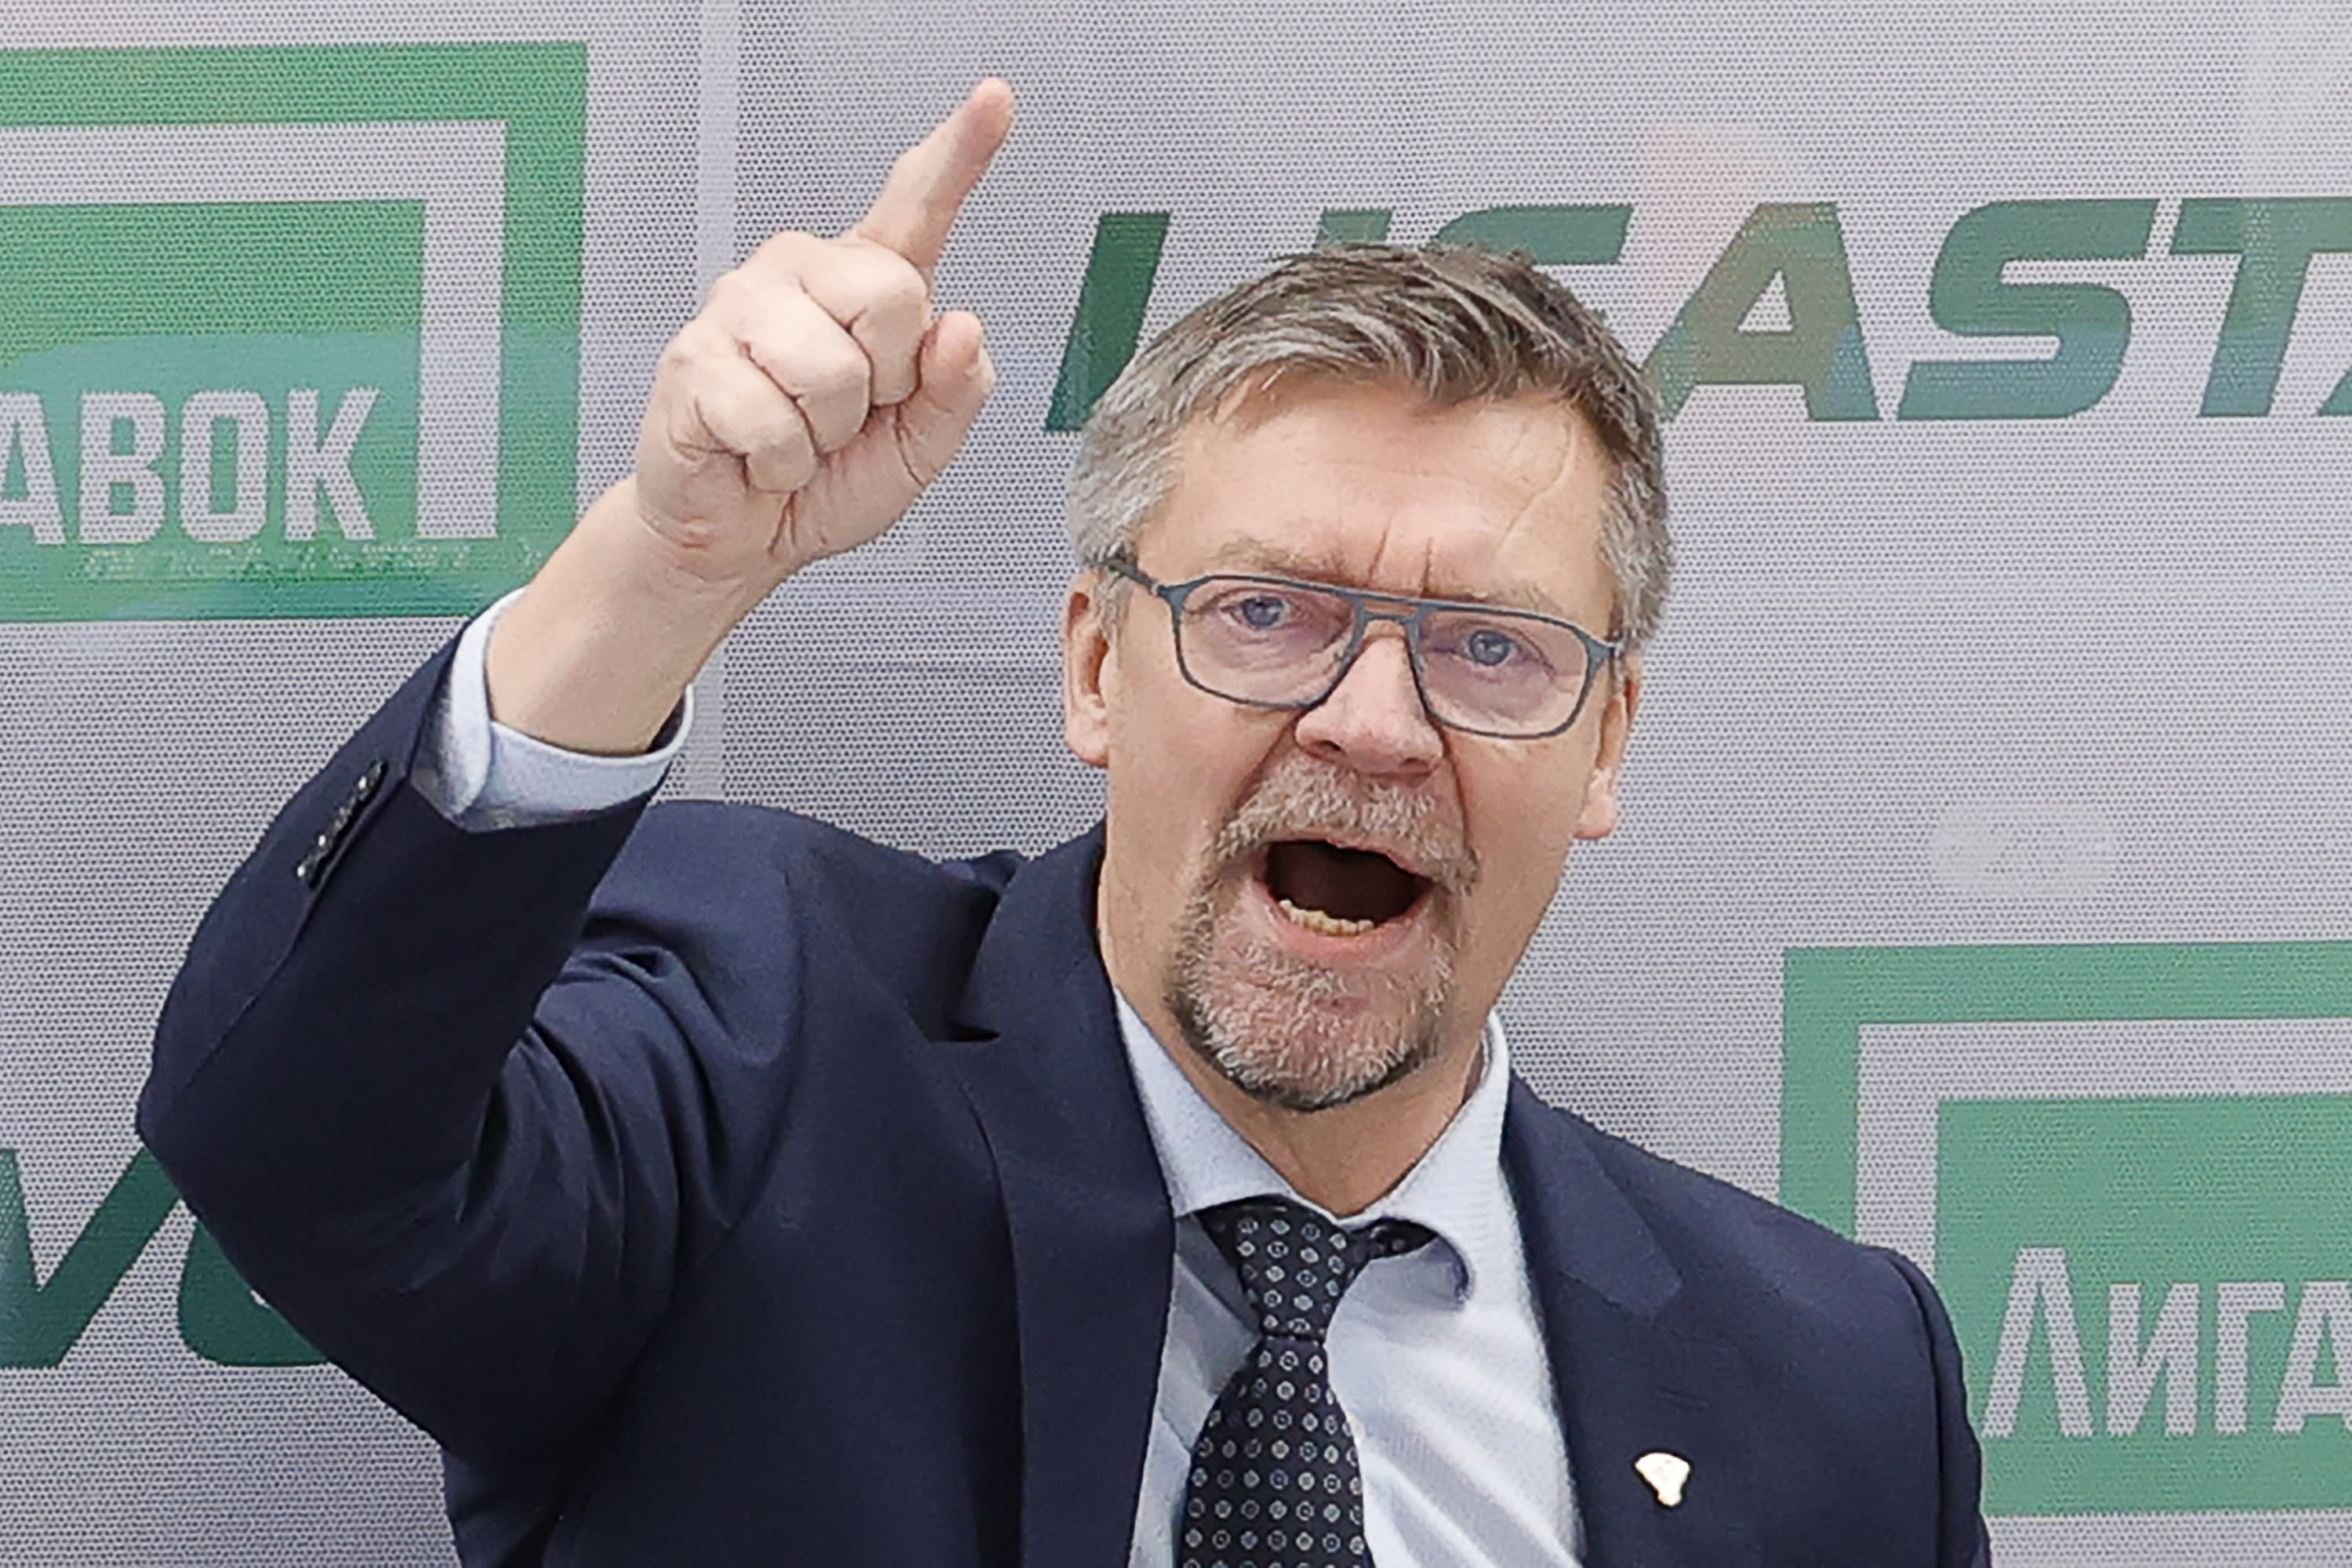 Finnish hockey coach criticizes “human rights violation” of Chinese quarantine rules.